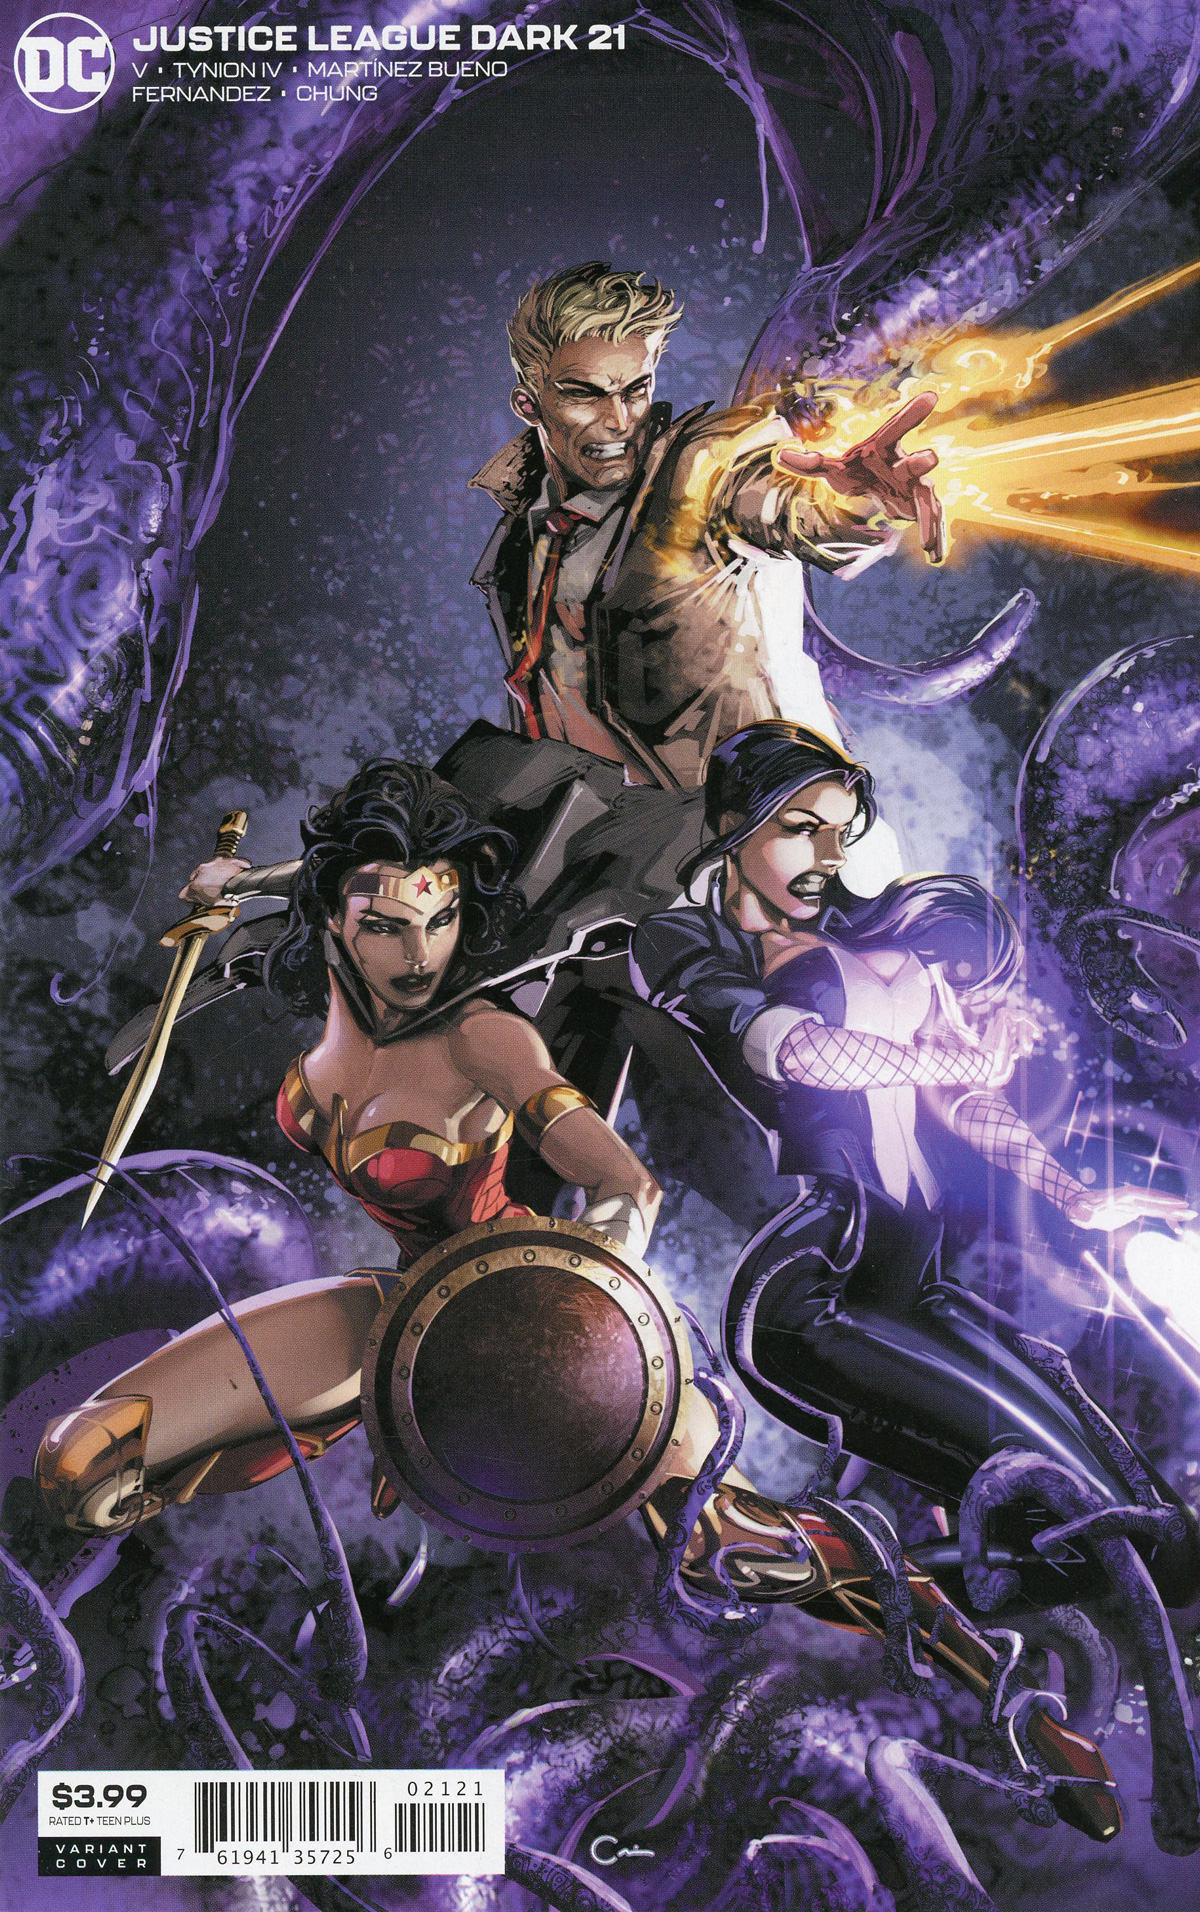 Justice League Dark Vol 2 #21 Cover B Variant Clayton Crain Cover